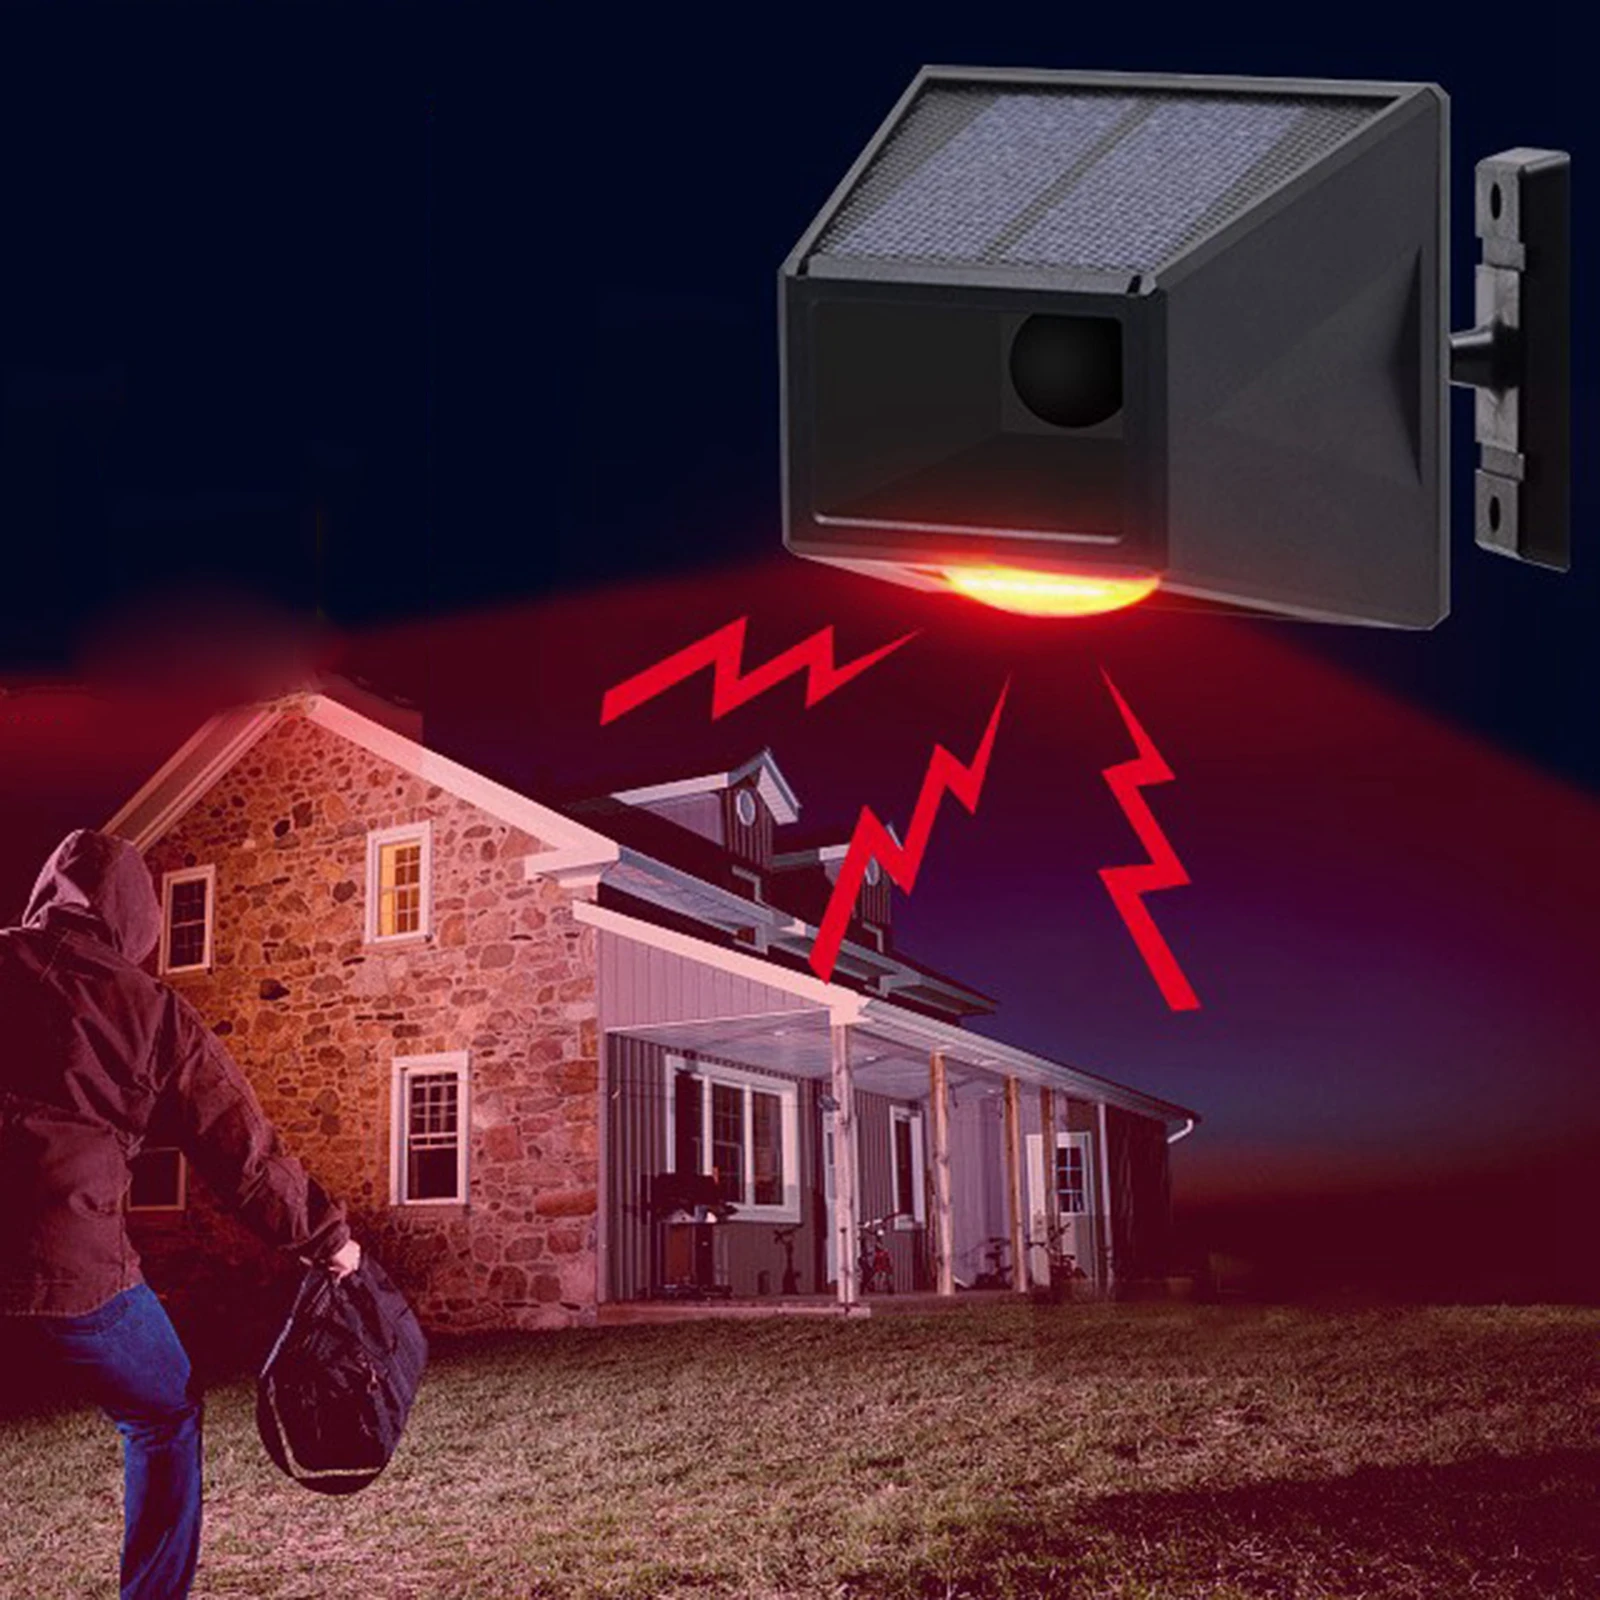 Garden Solar Driveway Alarm Light Remote Motion Sensor Outdoor Security